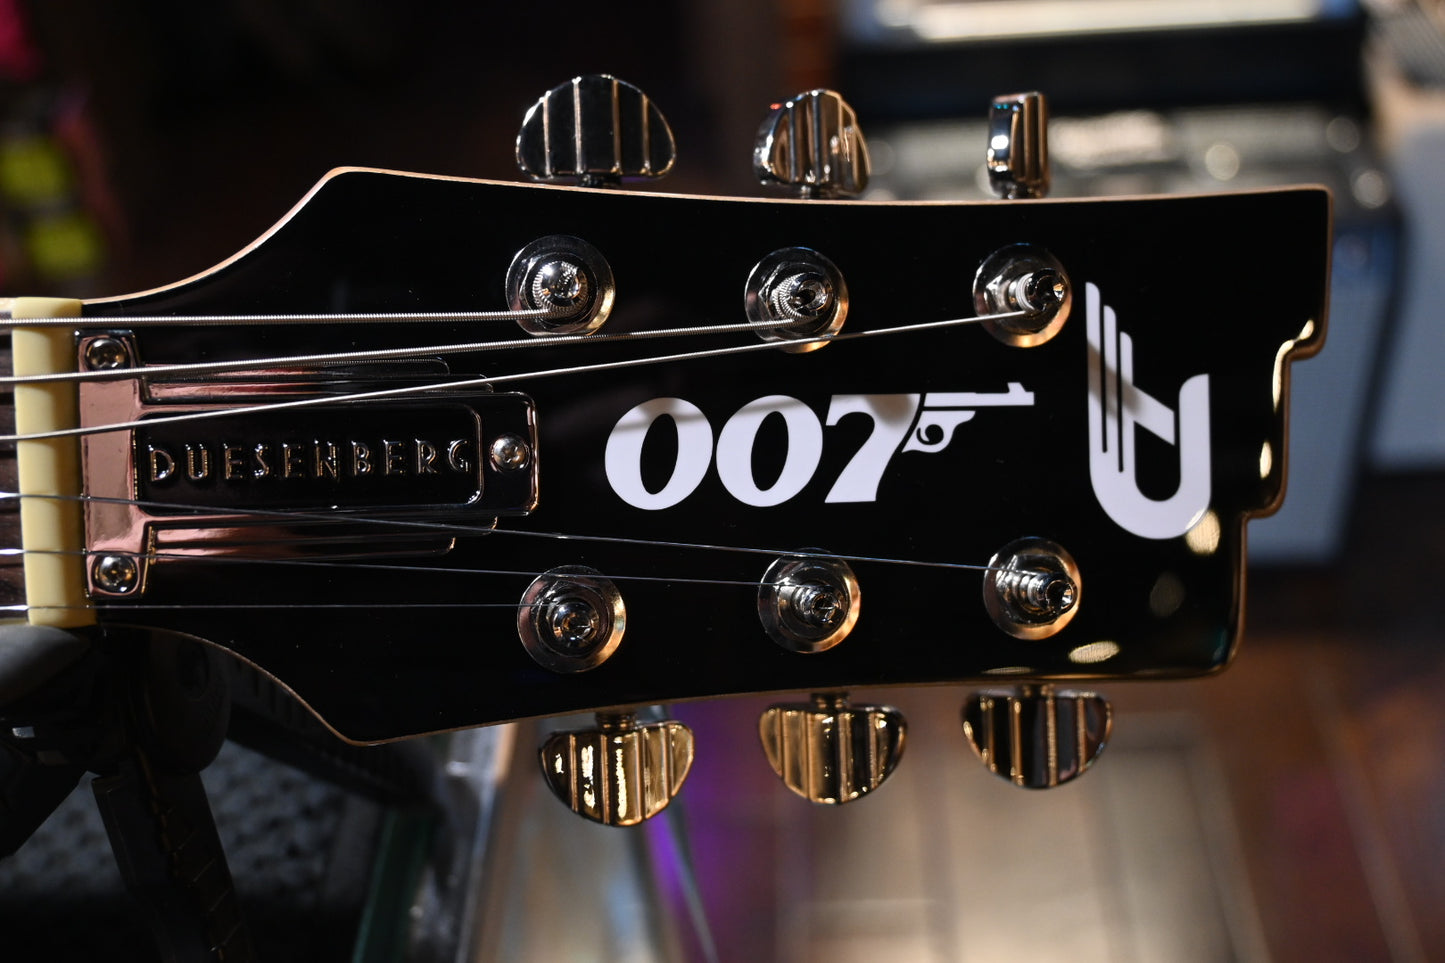 Duesenberg Alliance James Bond 007 Paloma David Arnold Edition - Monochrome Black and White Guitar #4934 - Danville Music